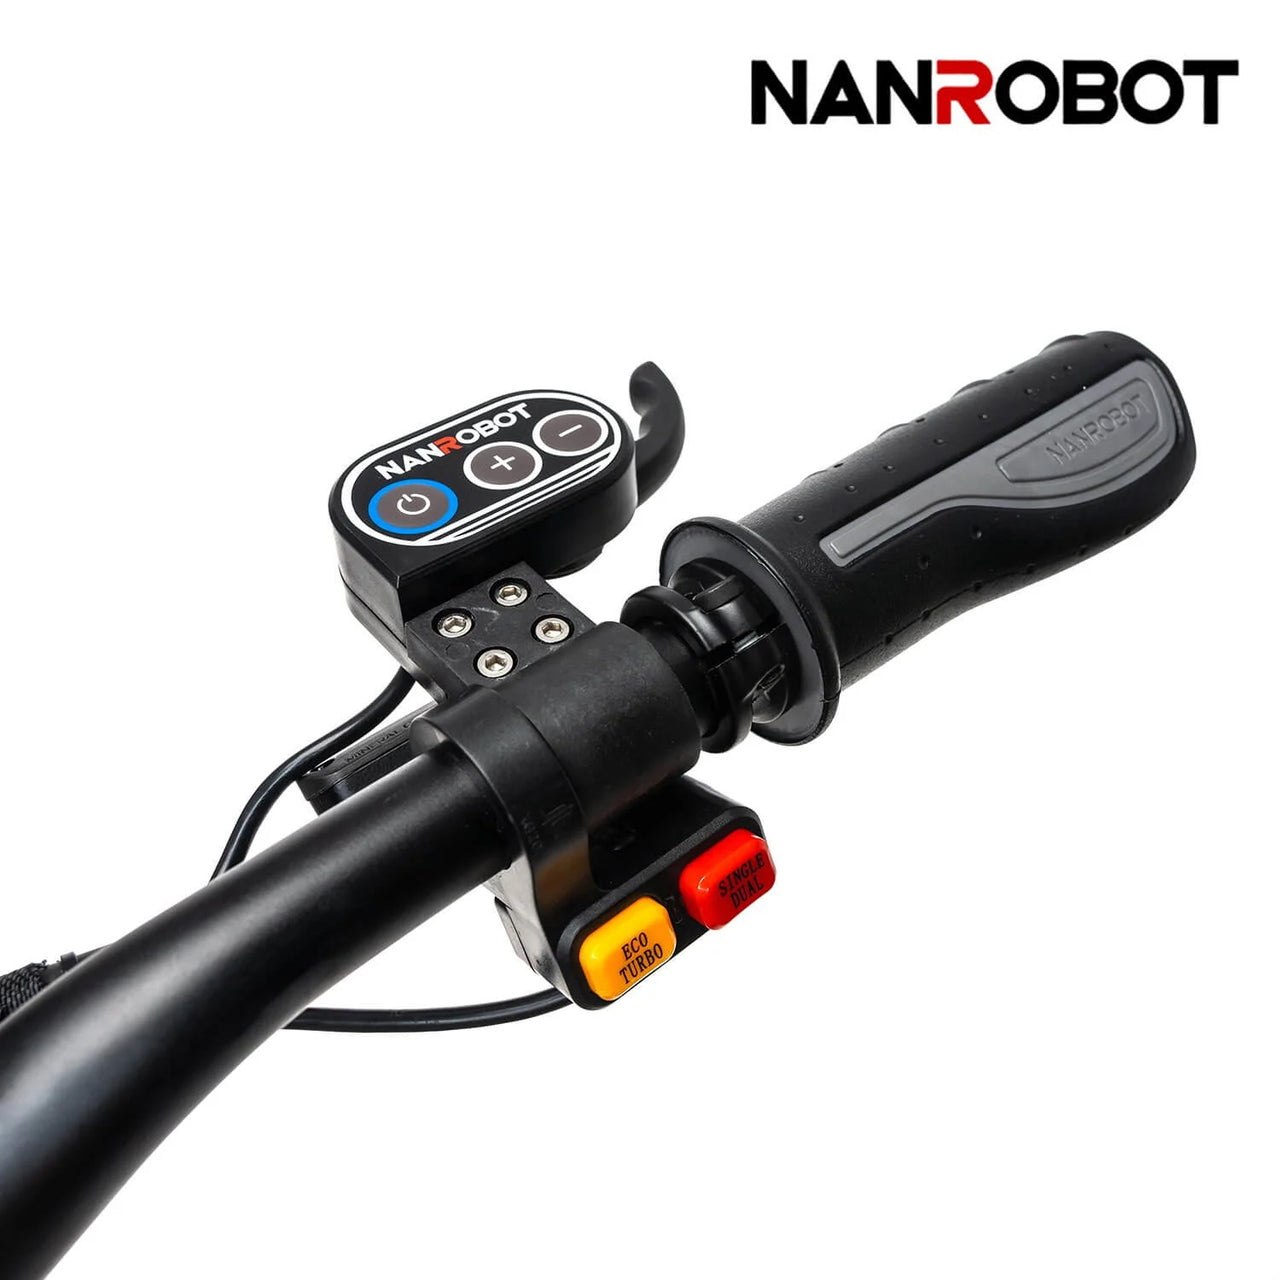 Nanrobot LS7+ All-Terrain Electric Scooter